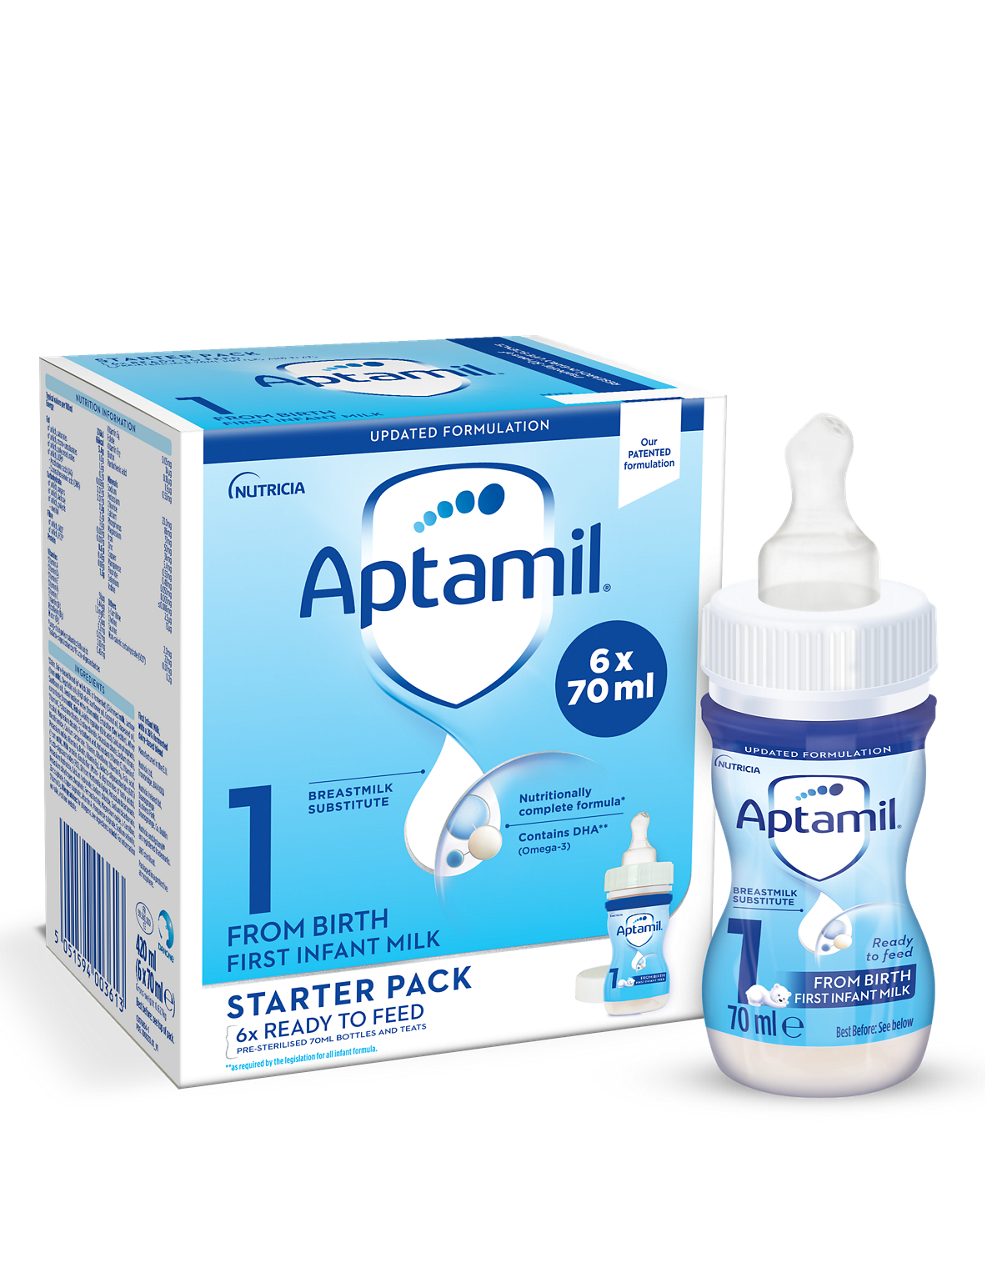 aptamil -如果- 6 - x70ml - starter pack -优化的角度- cu176854 - 1. - png